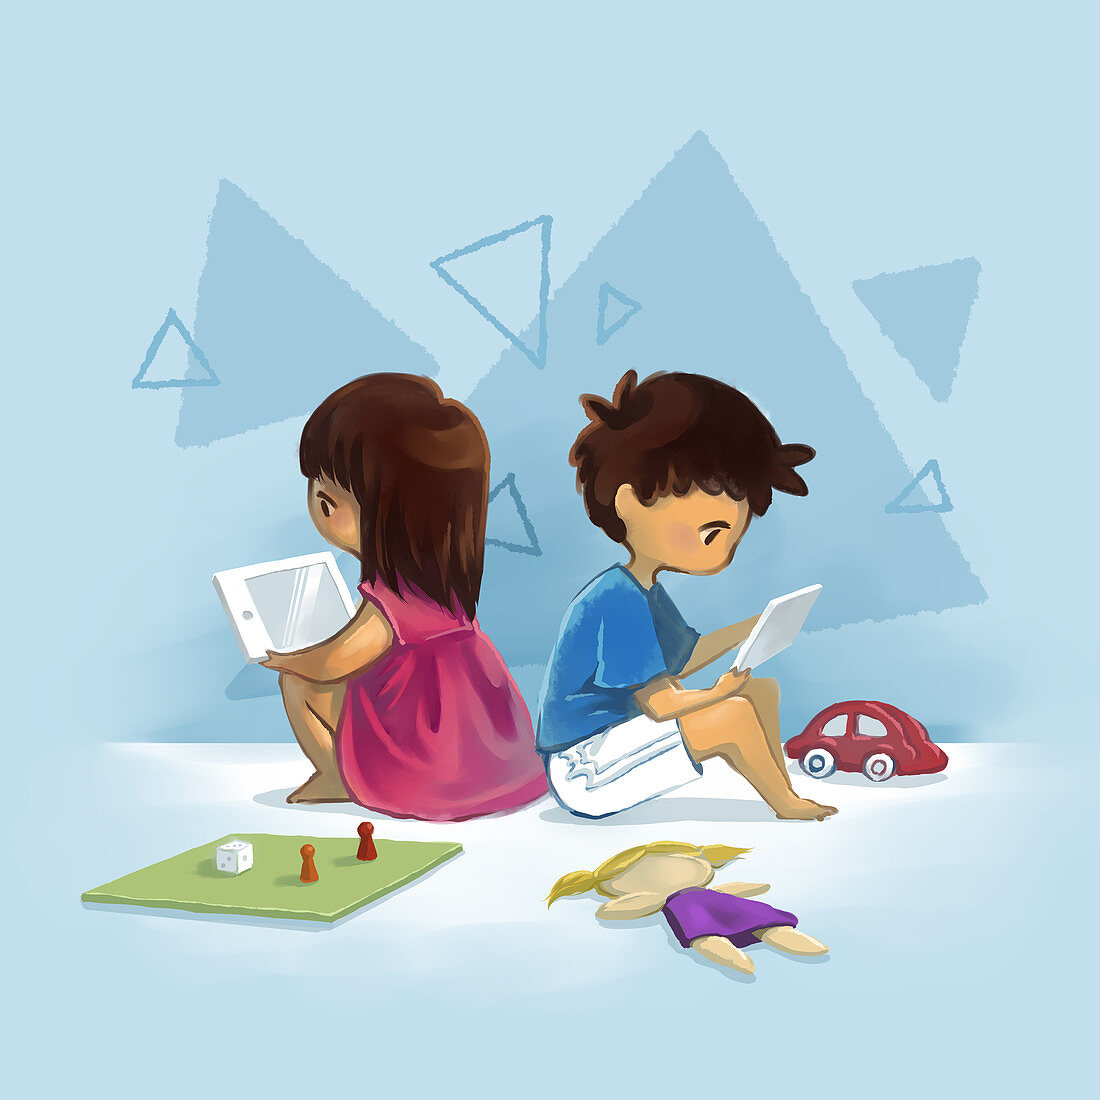 Illustration of children using digital tablet